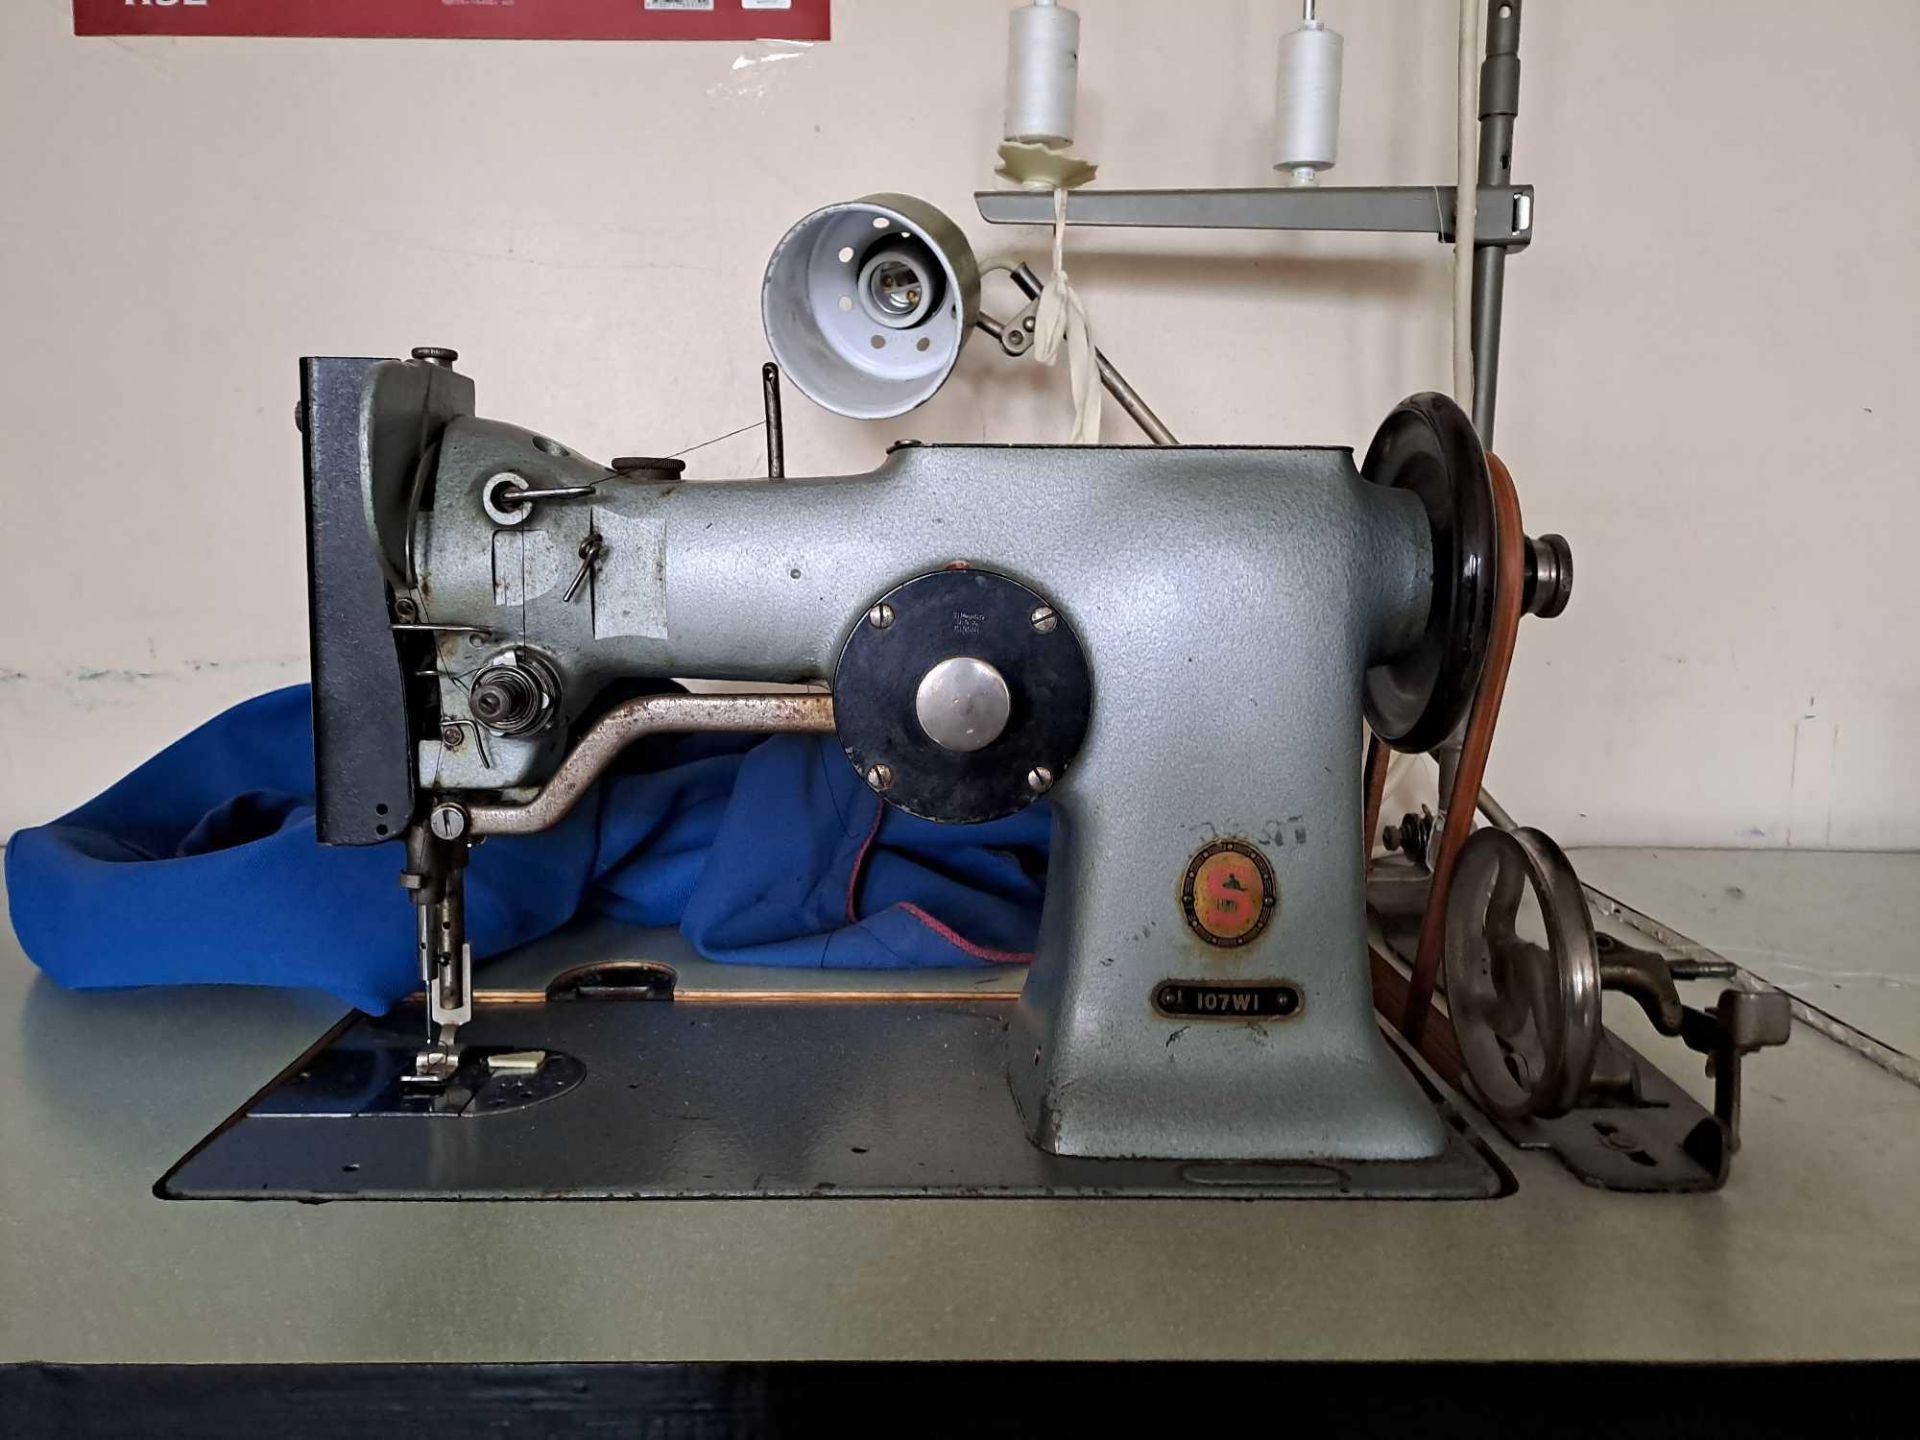 Singer 107W1 Sewing Machine - Image 2 of 6